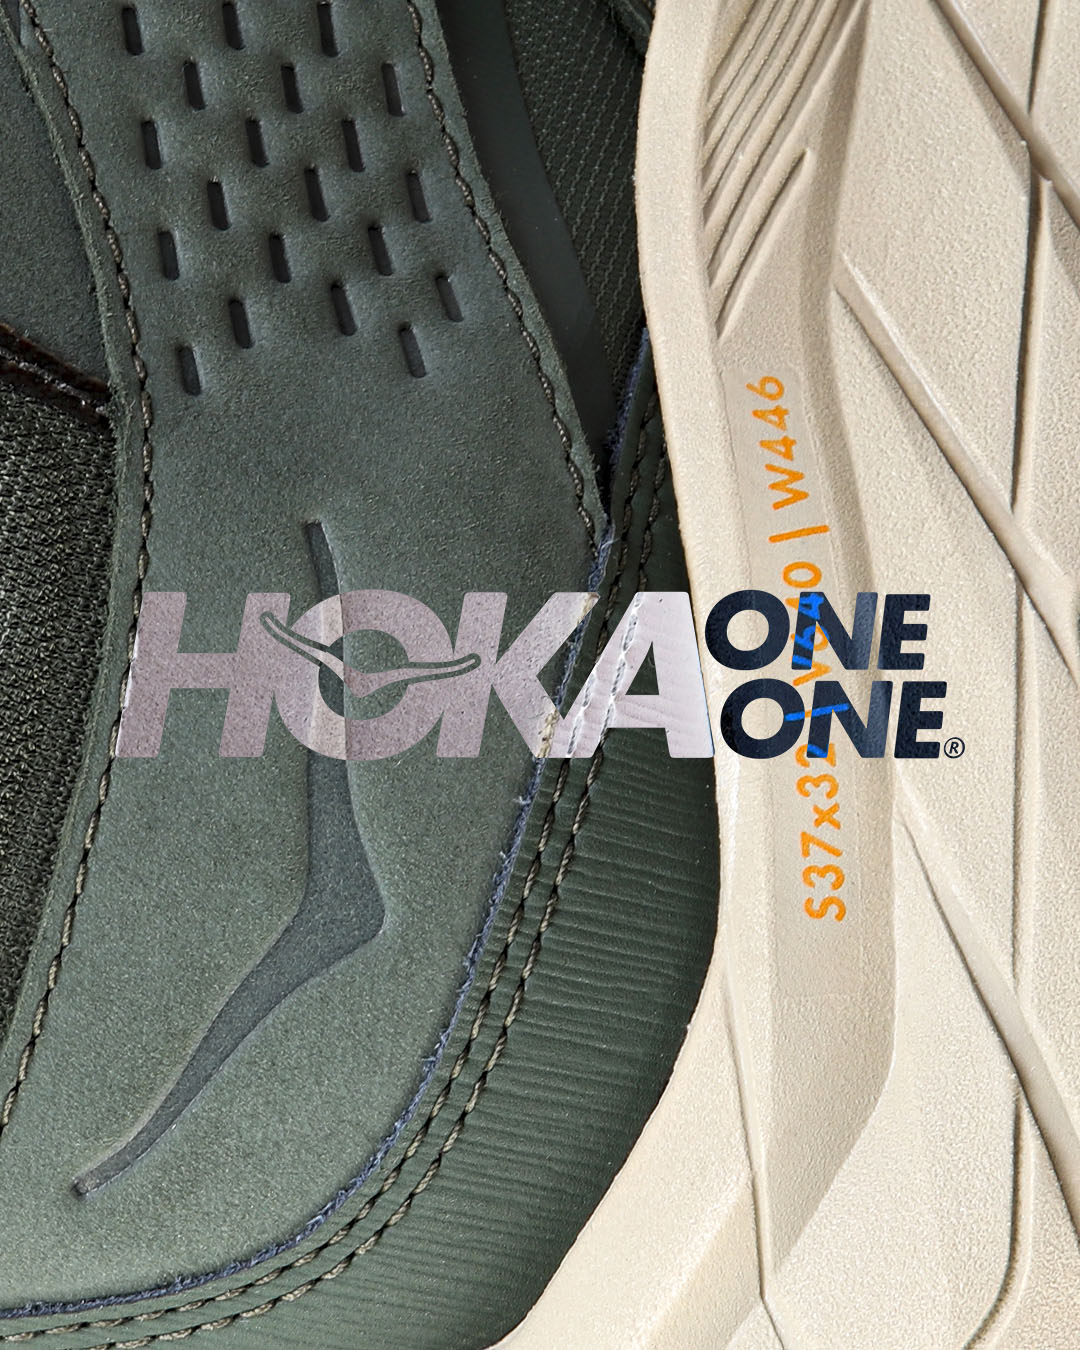 The History of Hoka One One